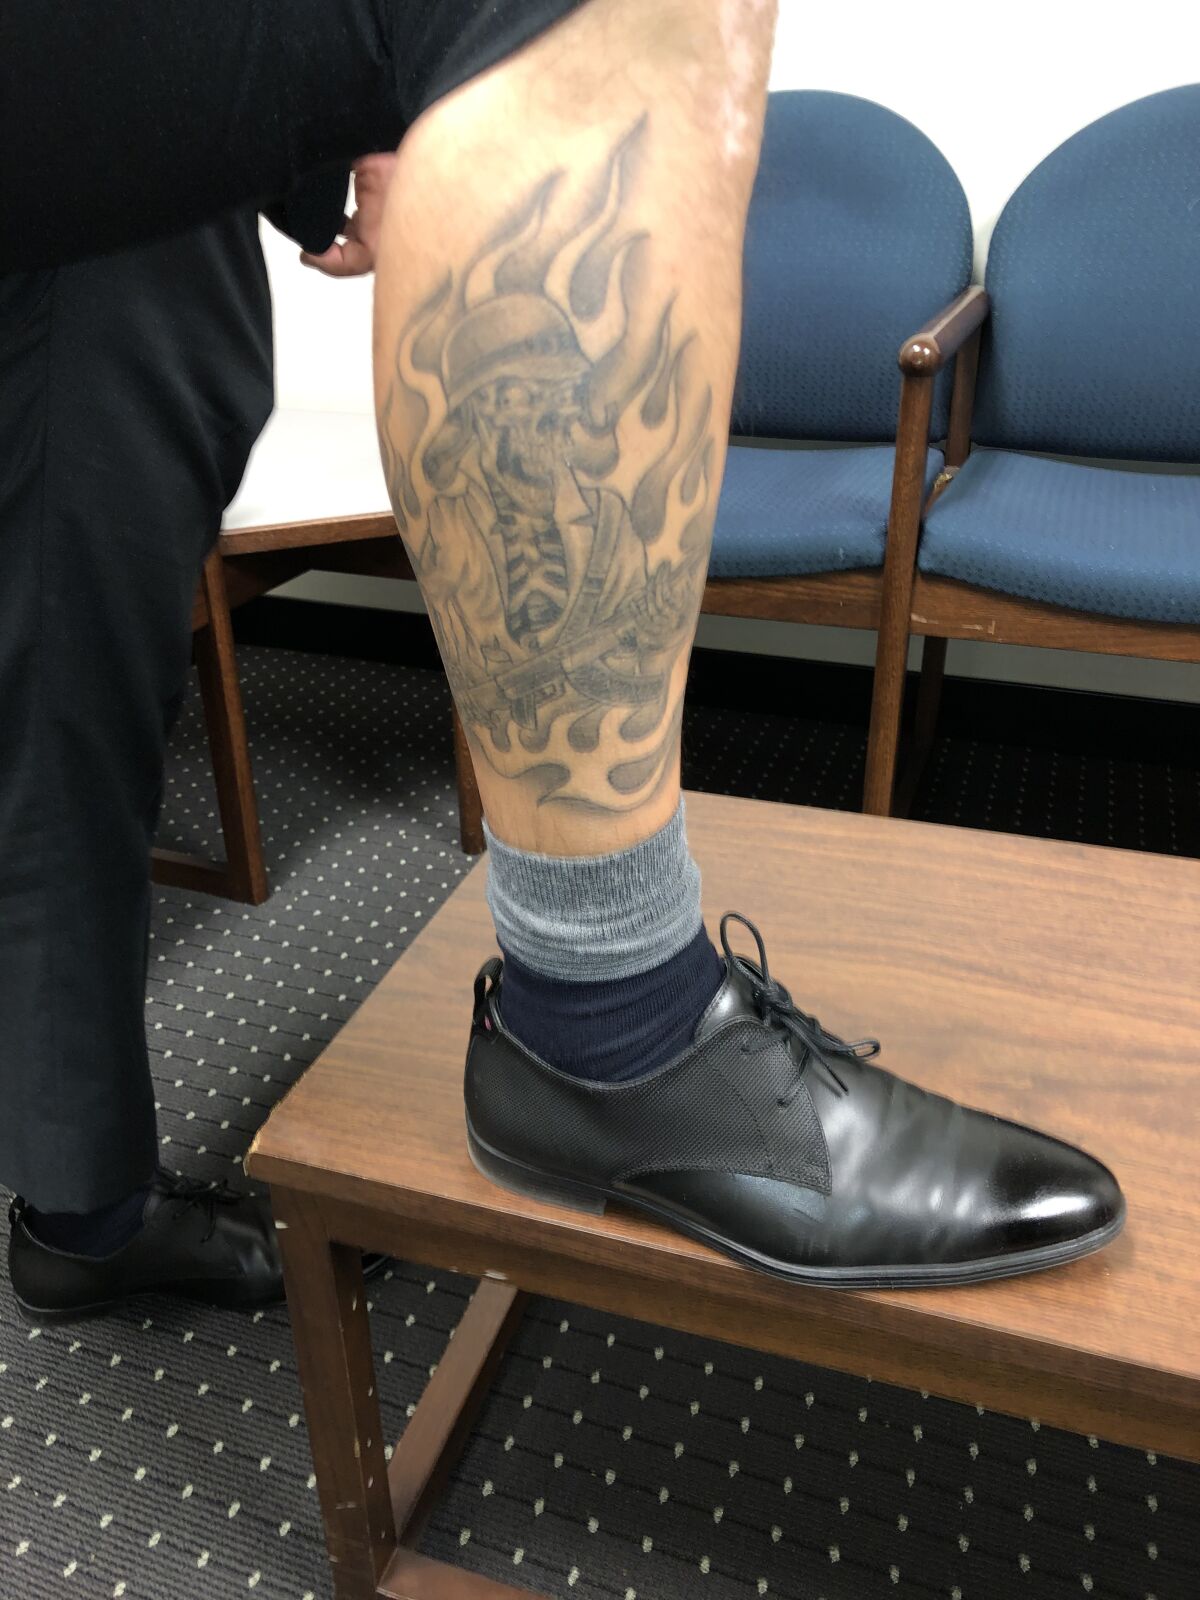 A tattoo on an L.A. County sheriff's deputy.